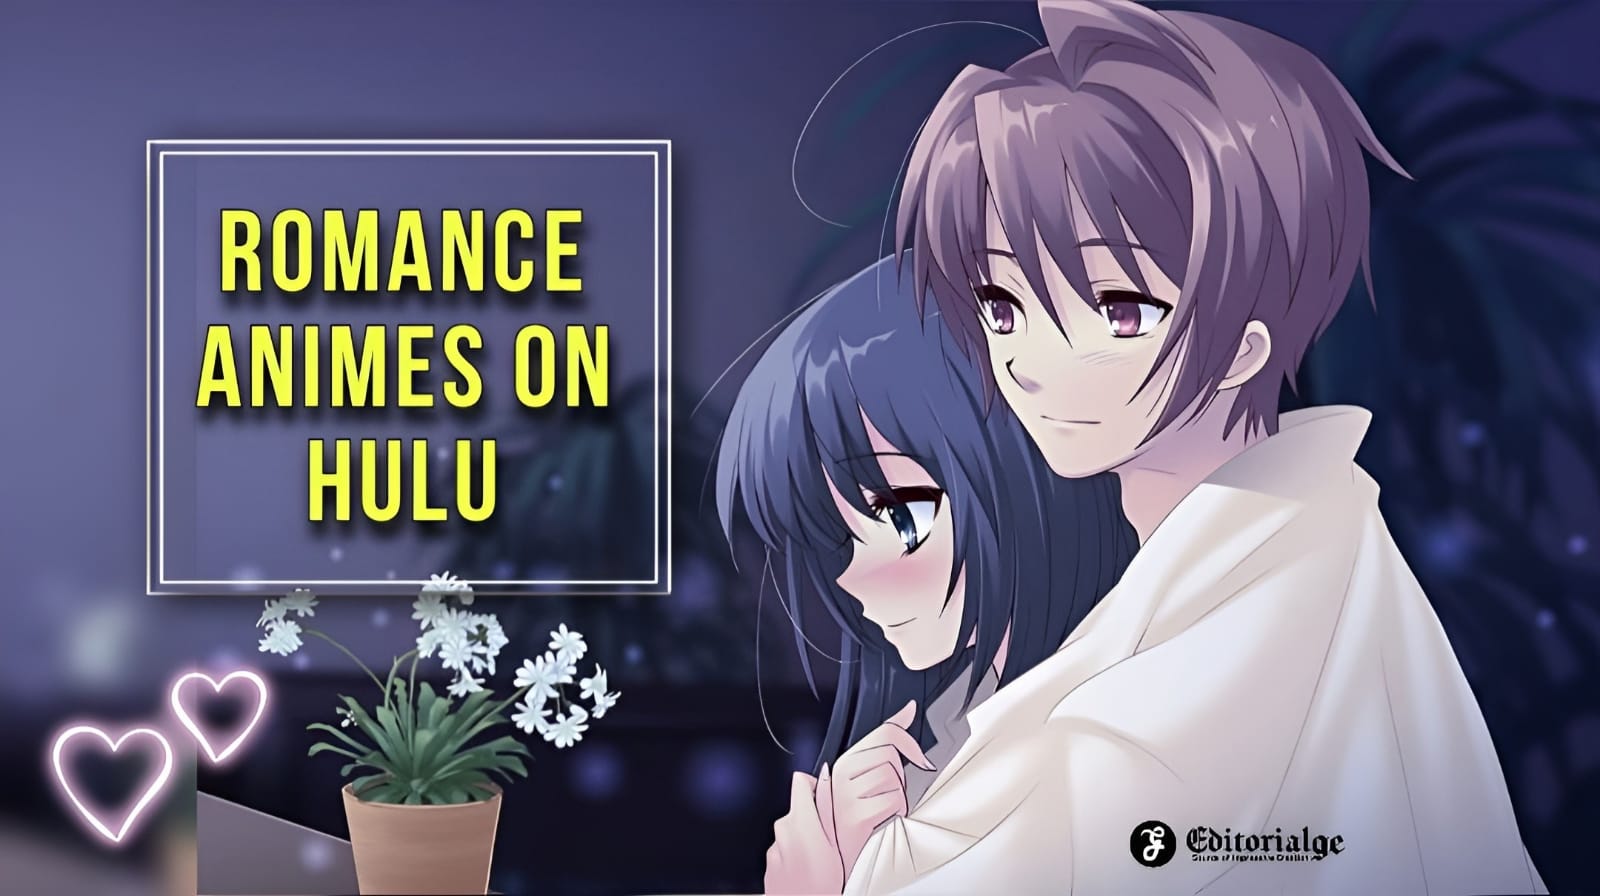 Romance animes on hulu